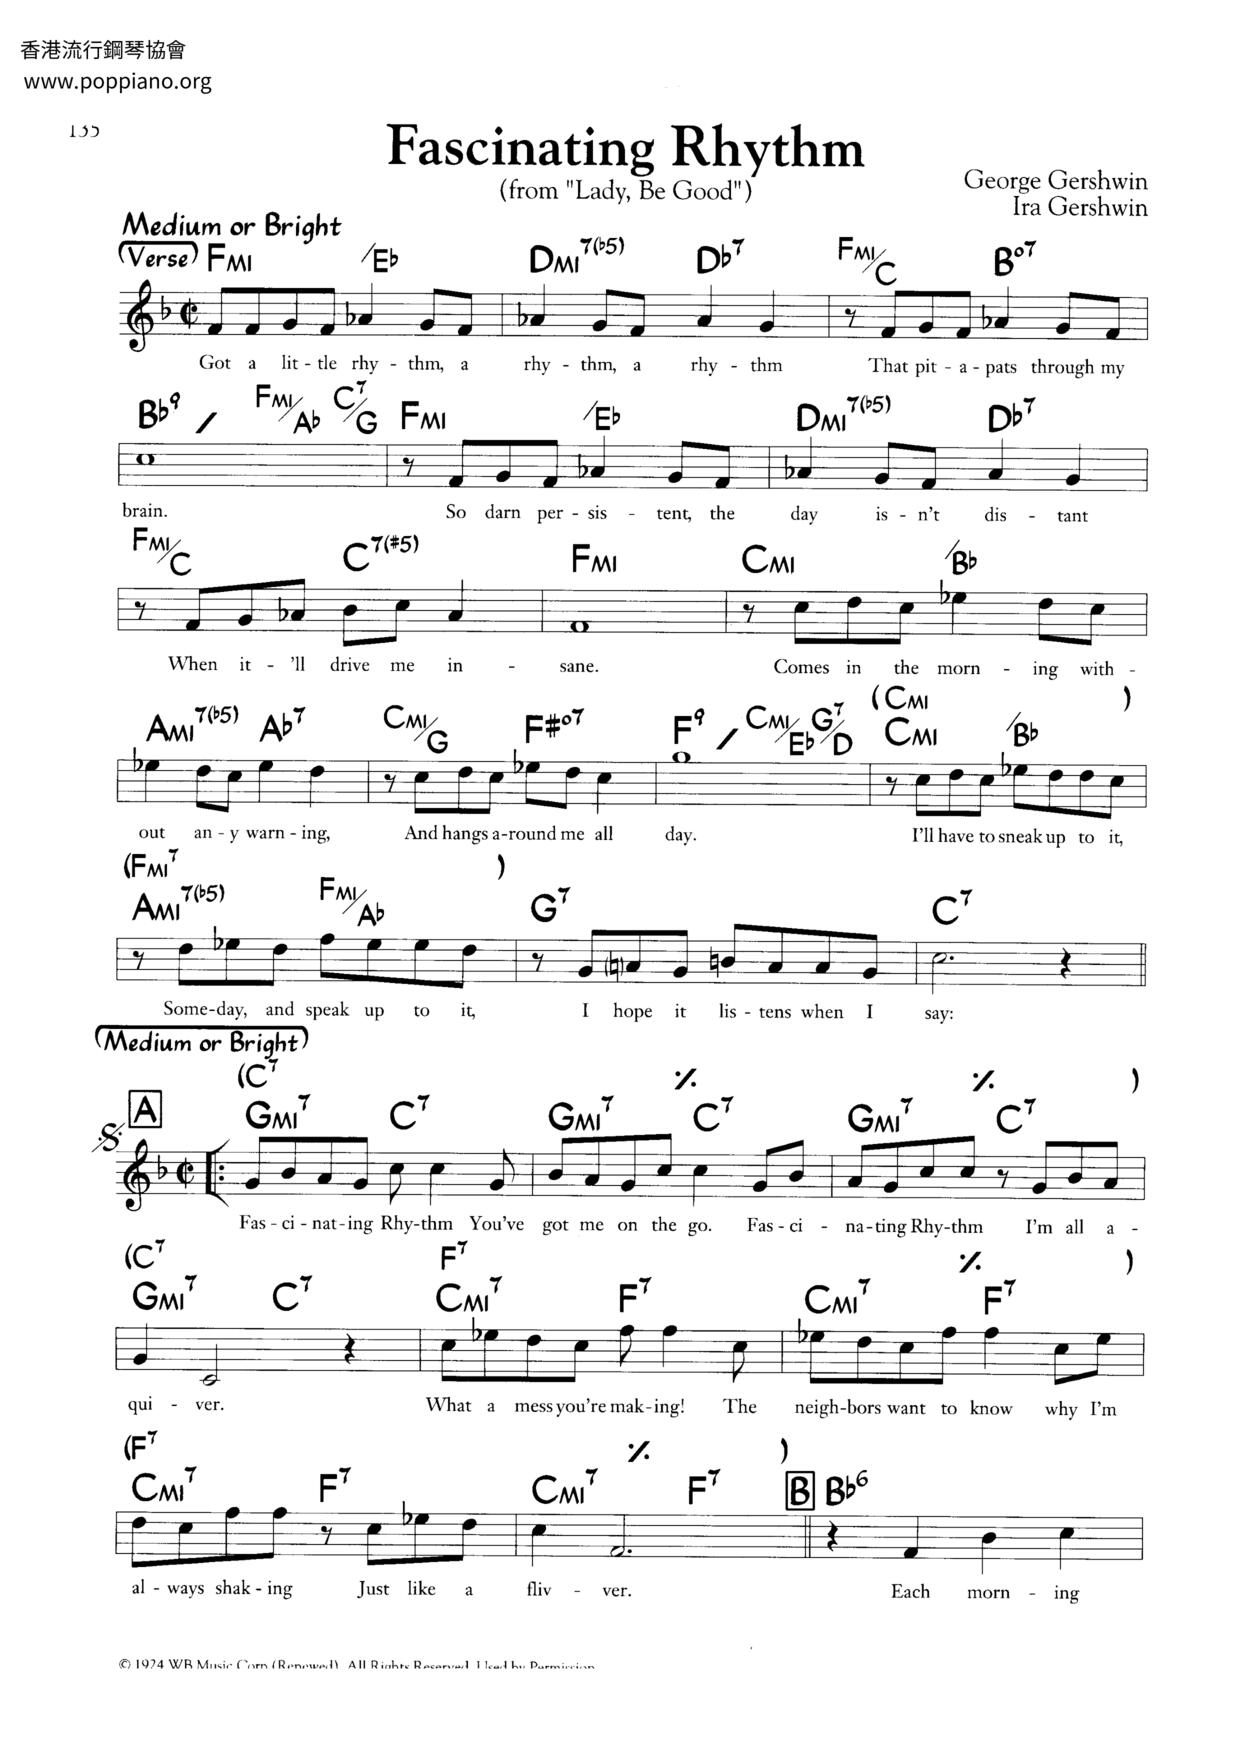 Fascinating Rhythm Score